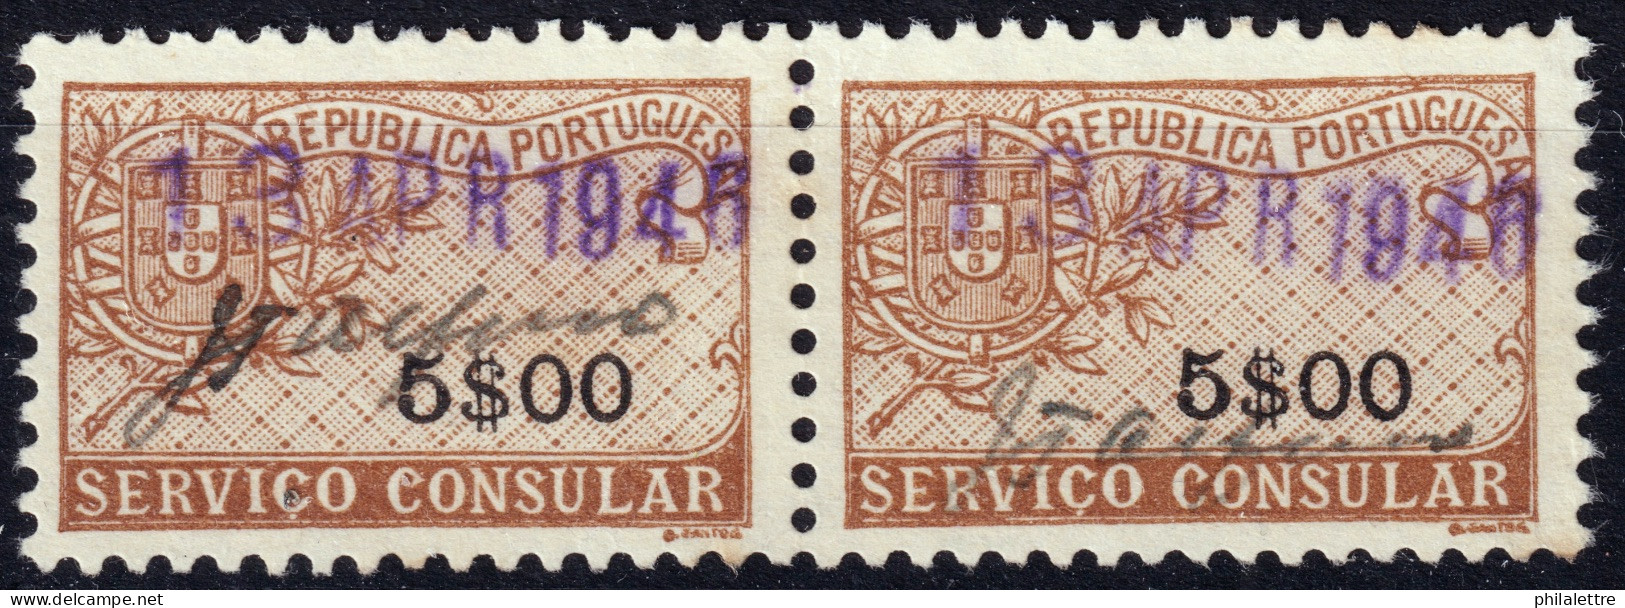 PORTUGAL - 1946 Pair Of 5.00esc. "SERVICIO CONSULAR" Fiscal Revenue Stamp - Very Fine Used - Used Stamps